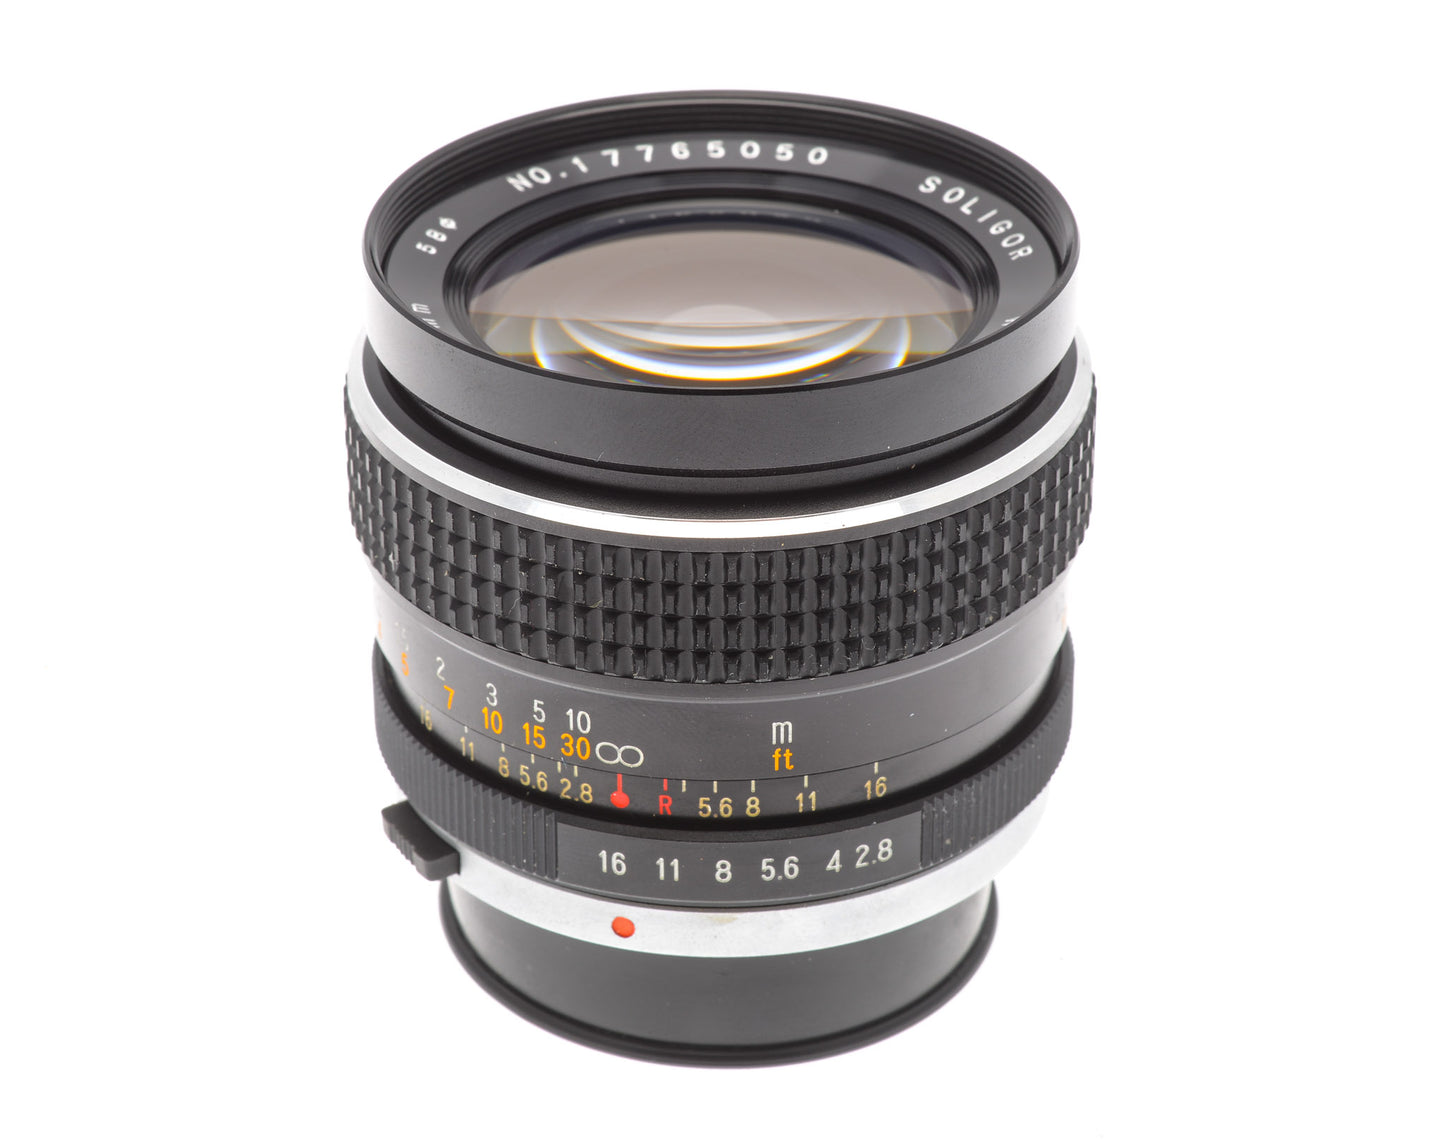 Soligor 28mm f2.8 Wide-Auto - Lens